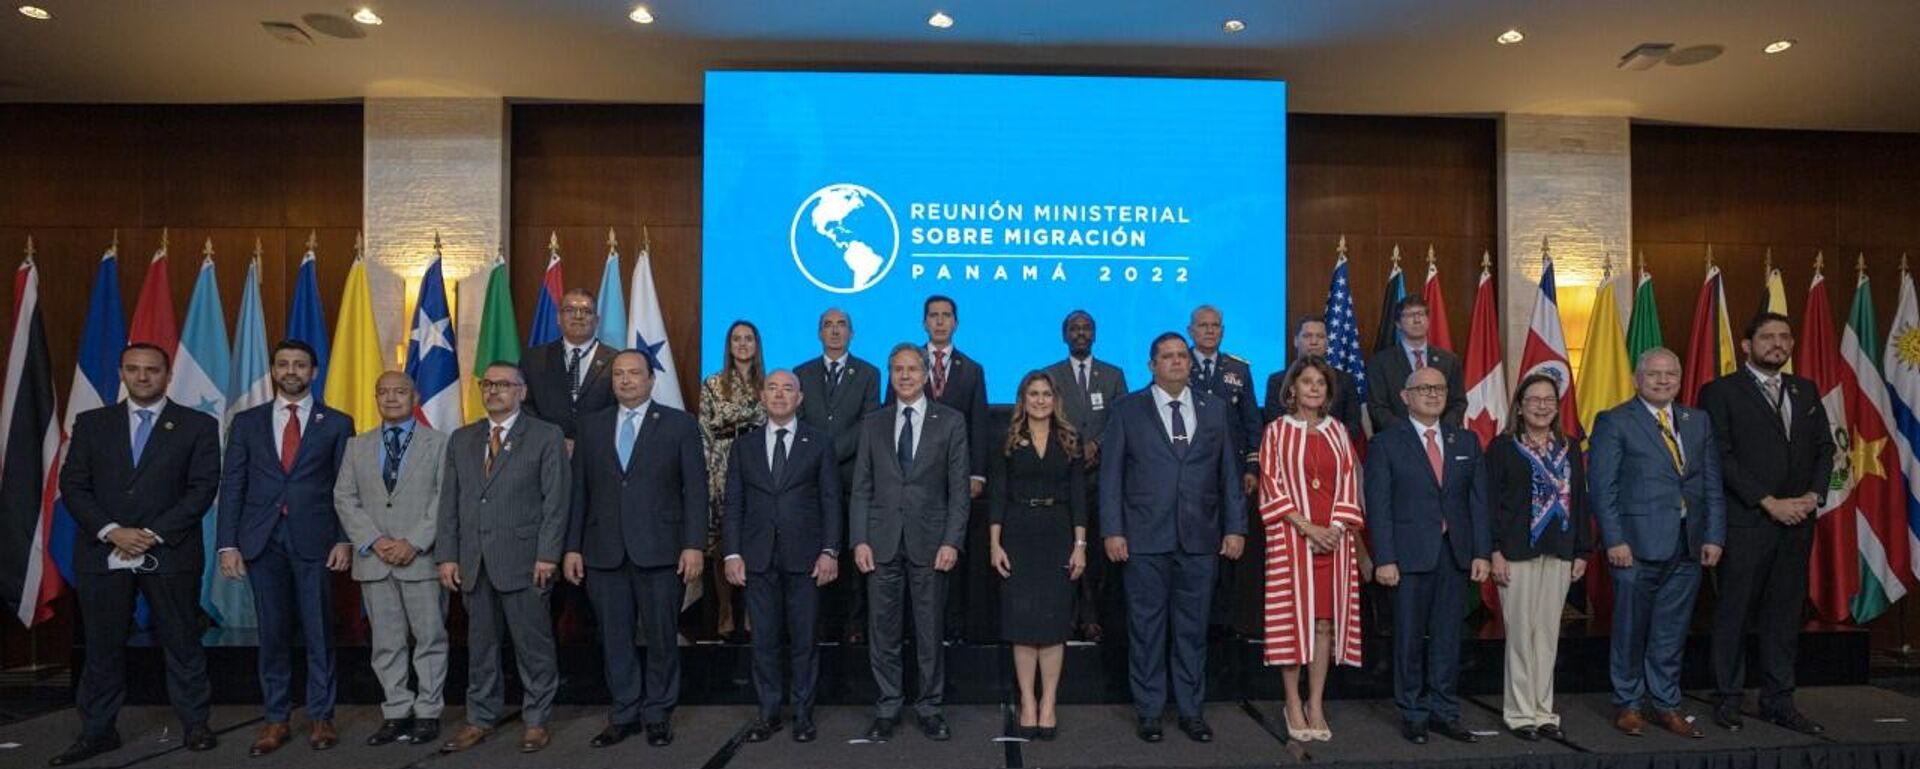 Reunión Ministerial sobre Migración en Panamá - Sputnik Mundo, 1920, 20.04.2022